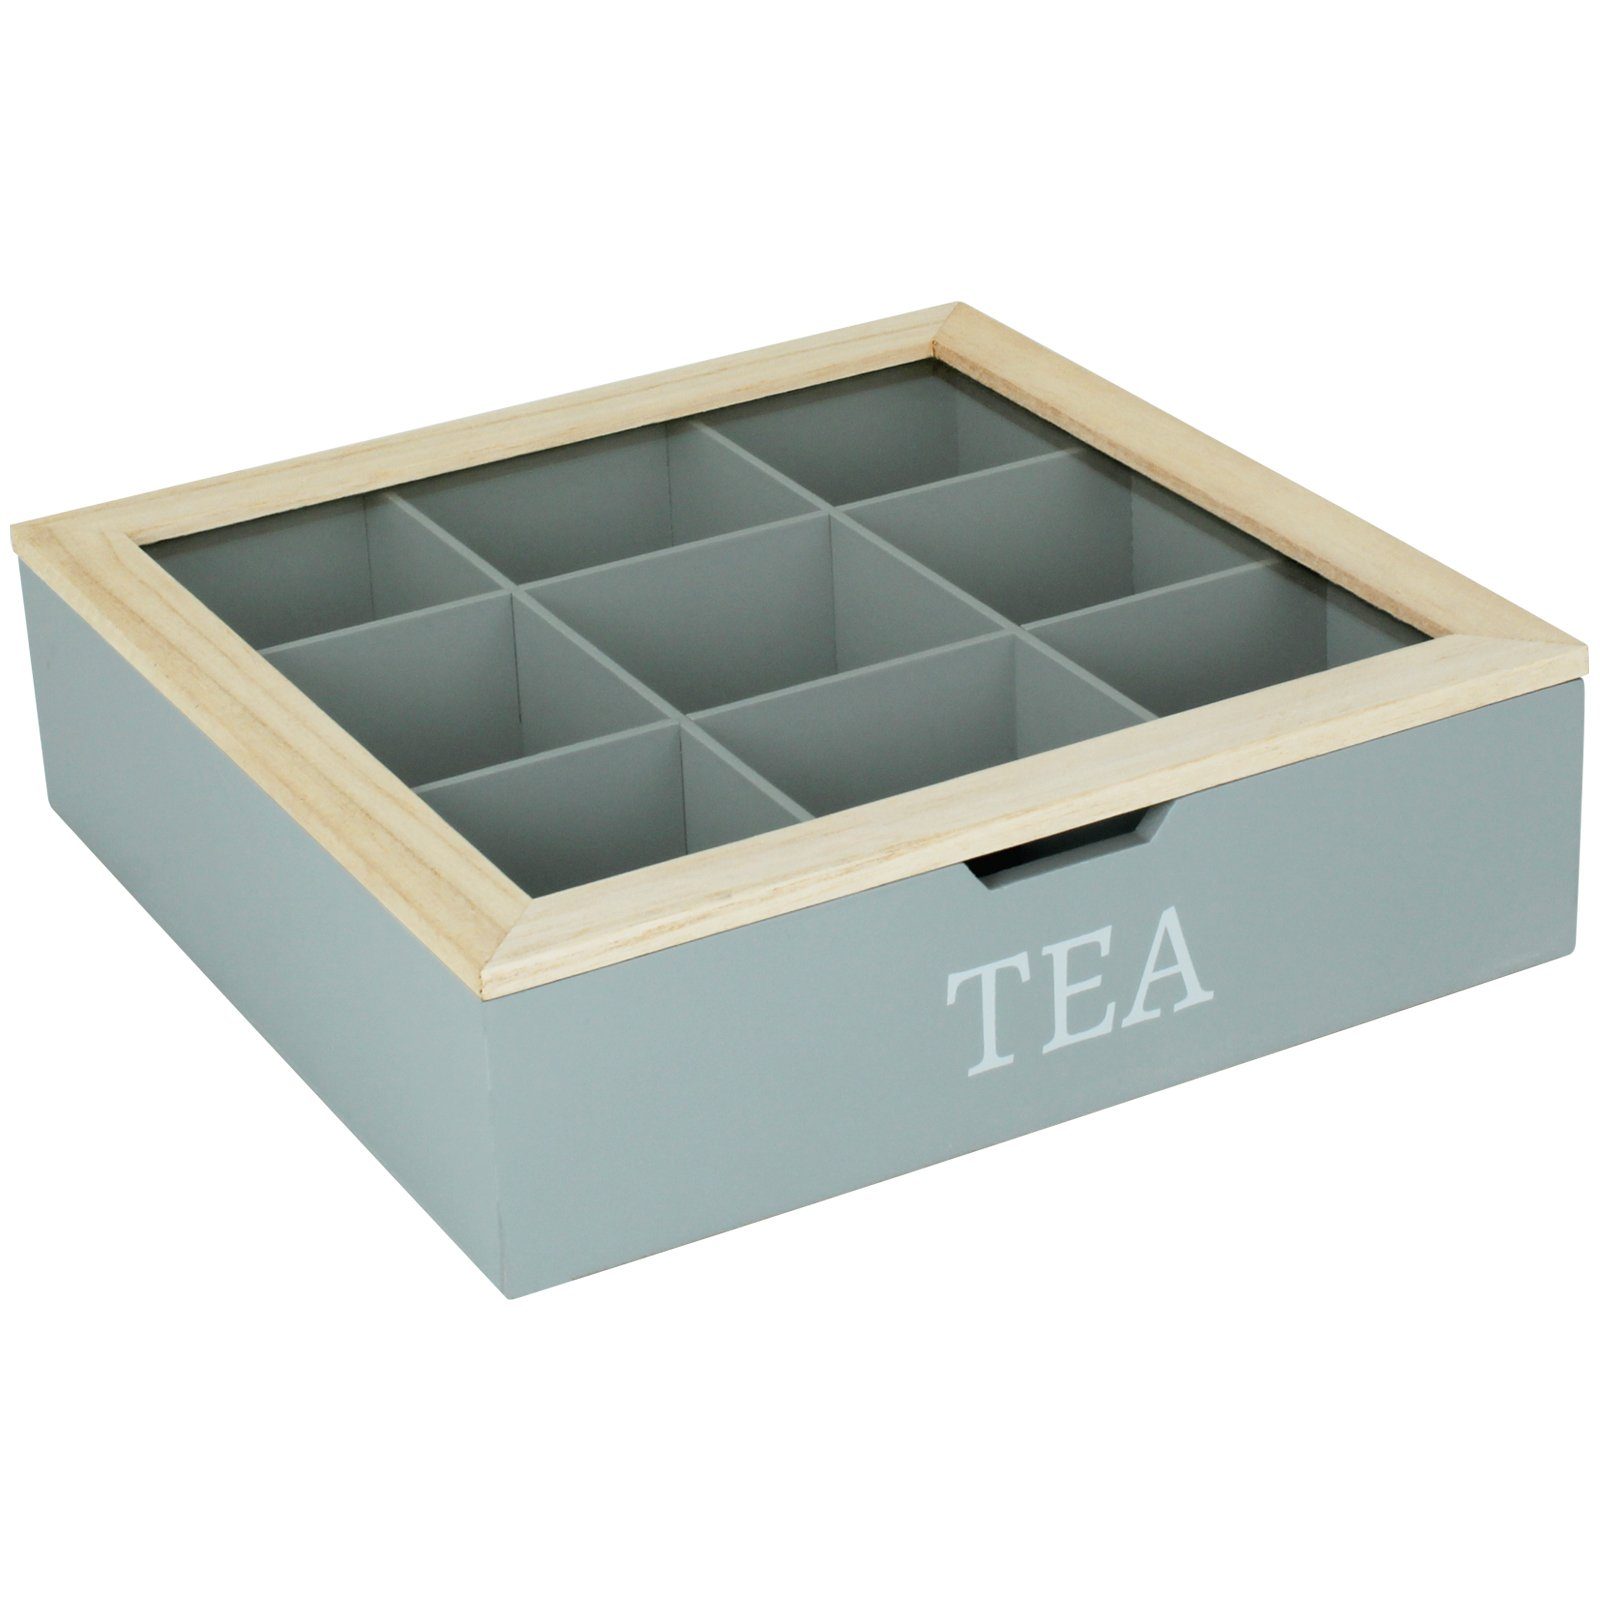 Koopman Teebox Teekiste 9 Fächer Eingriff TEA Farbwahl Teekasten Teebeutelbox, Tee Dose Kiste Box Tee-Beutel Teesorten Teebeutel Holzteebox Holz Grau